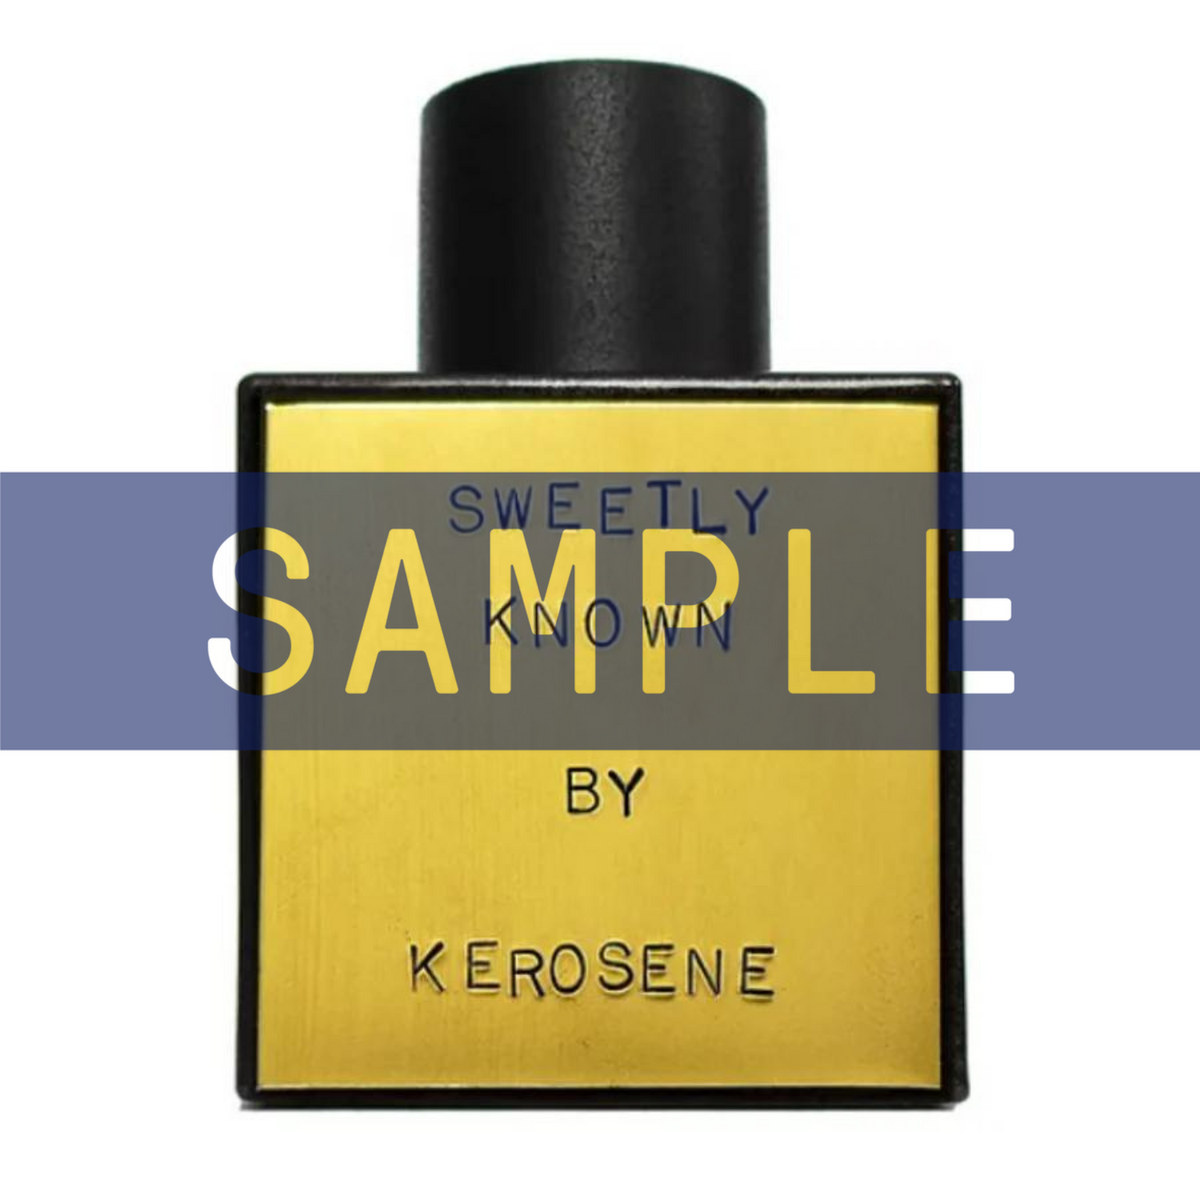 Primary Image of Sample - Sweetly Known Eau De Parfum